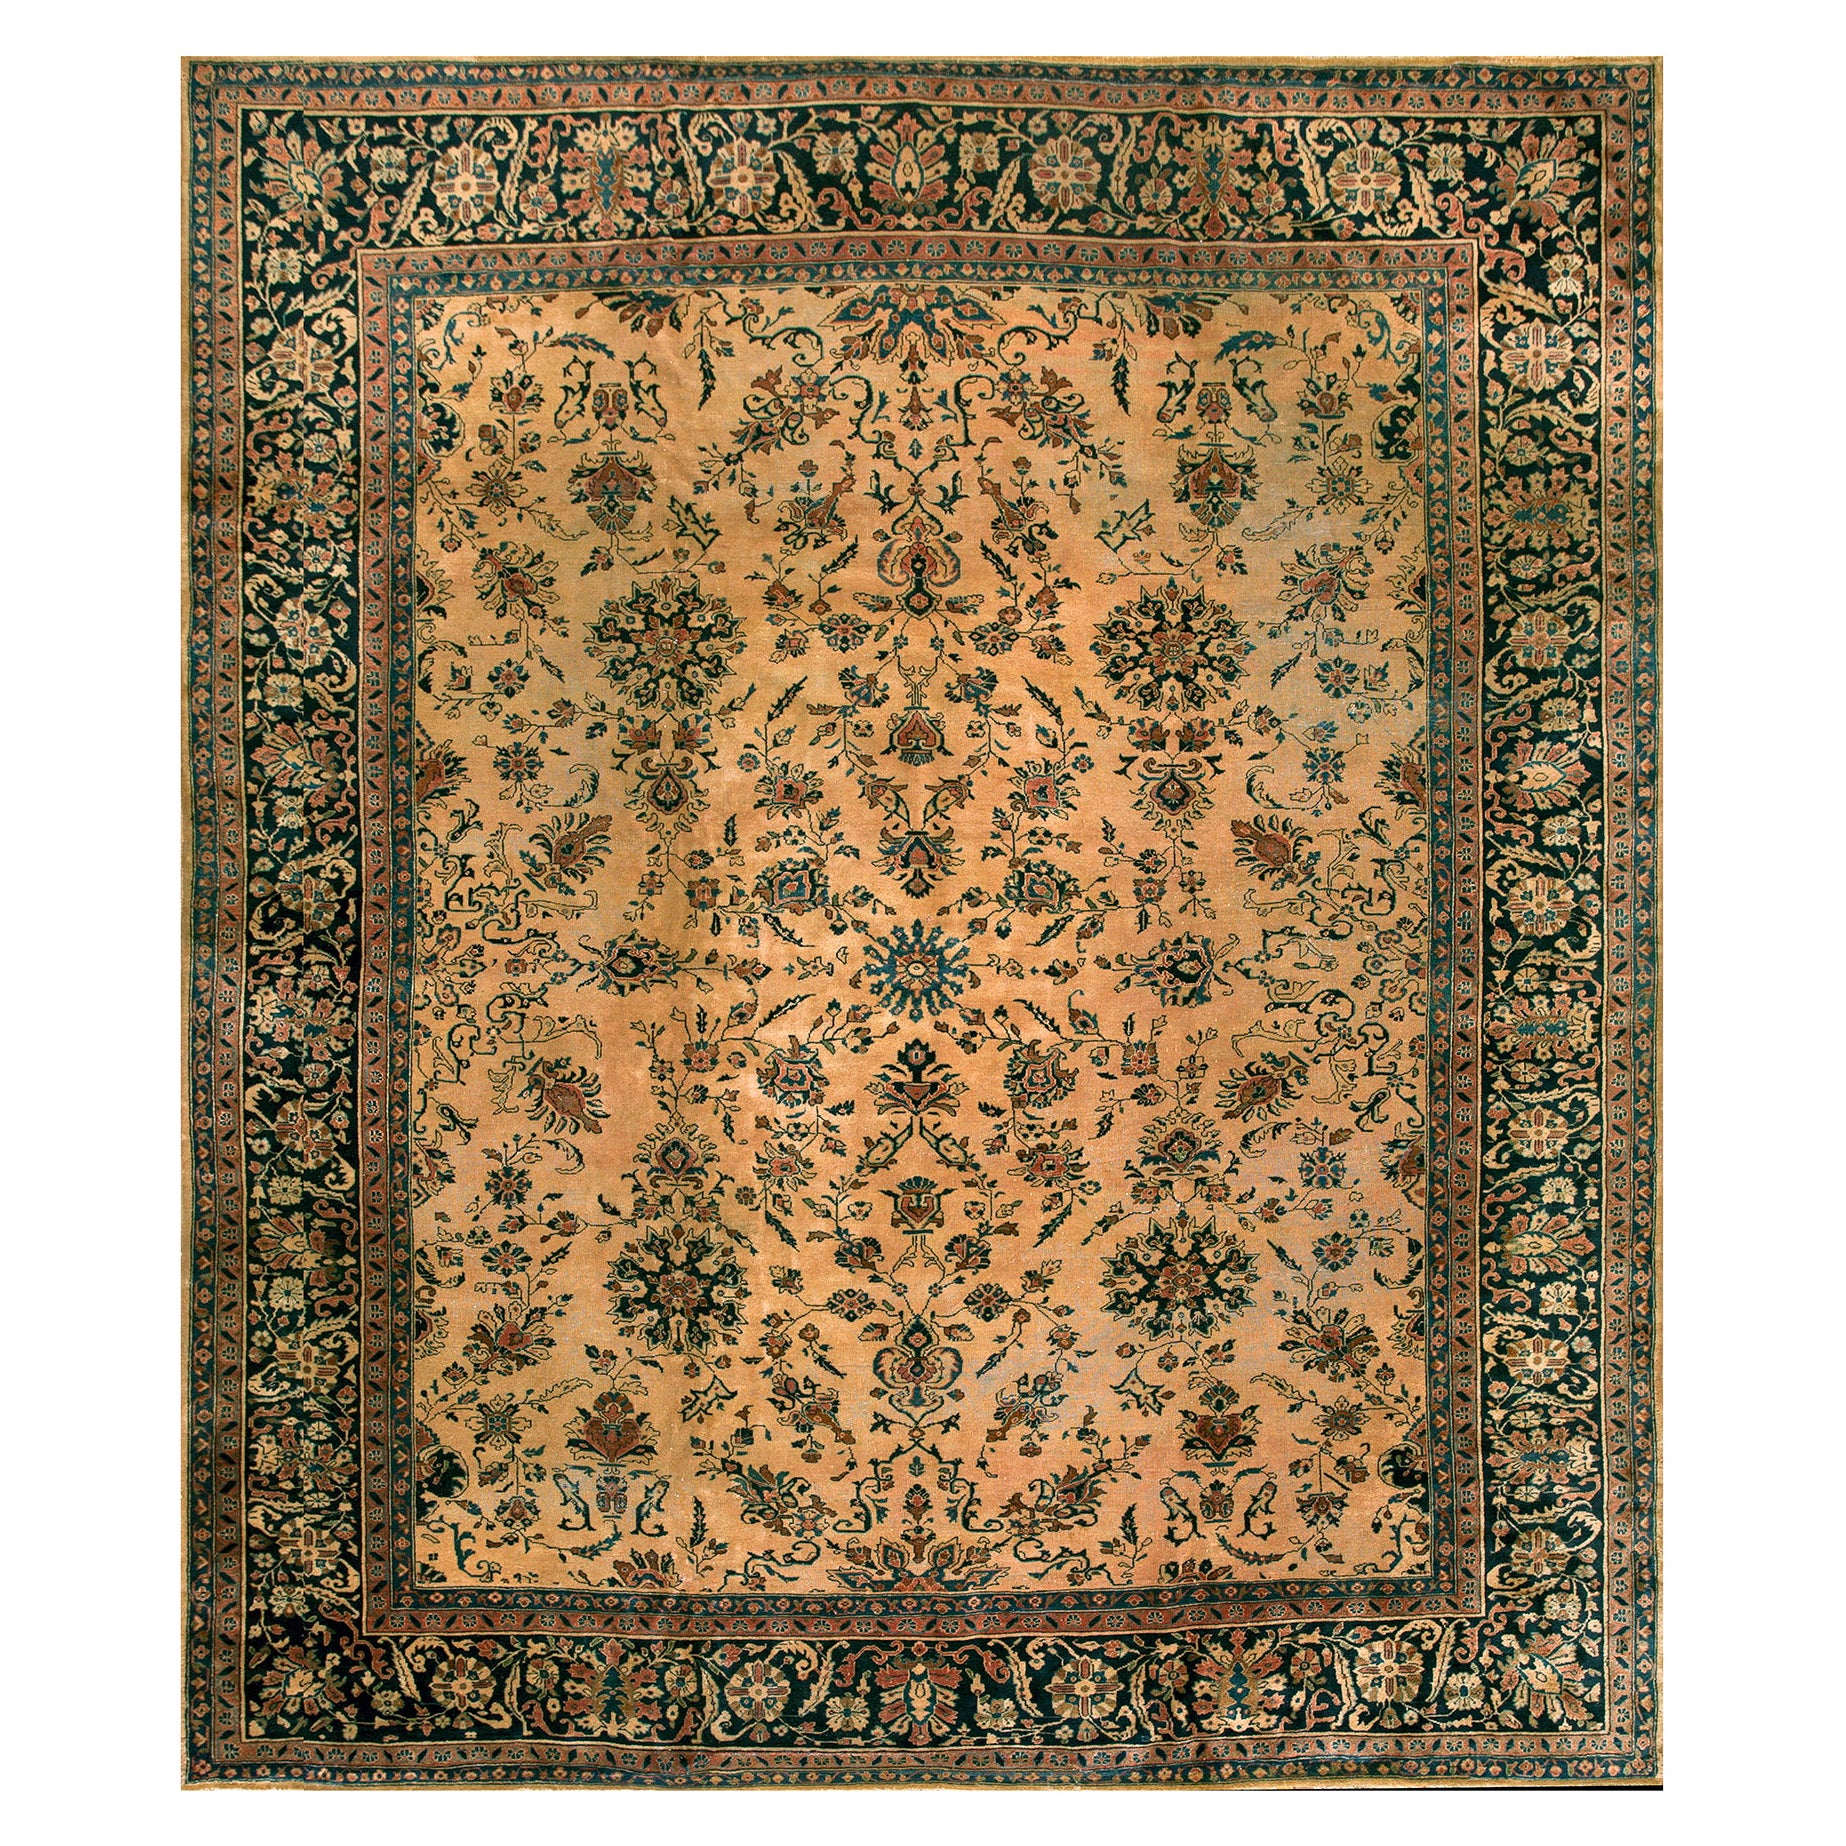 1920s Persian Sarouk Carpet ( 10' x 11'9" - 305 x 358 cm ) For Sale